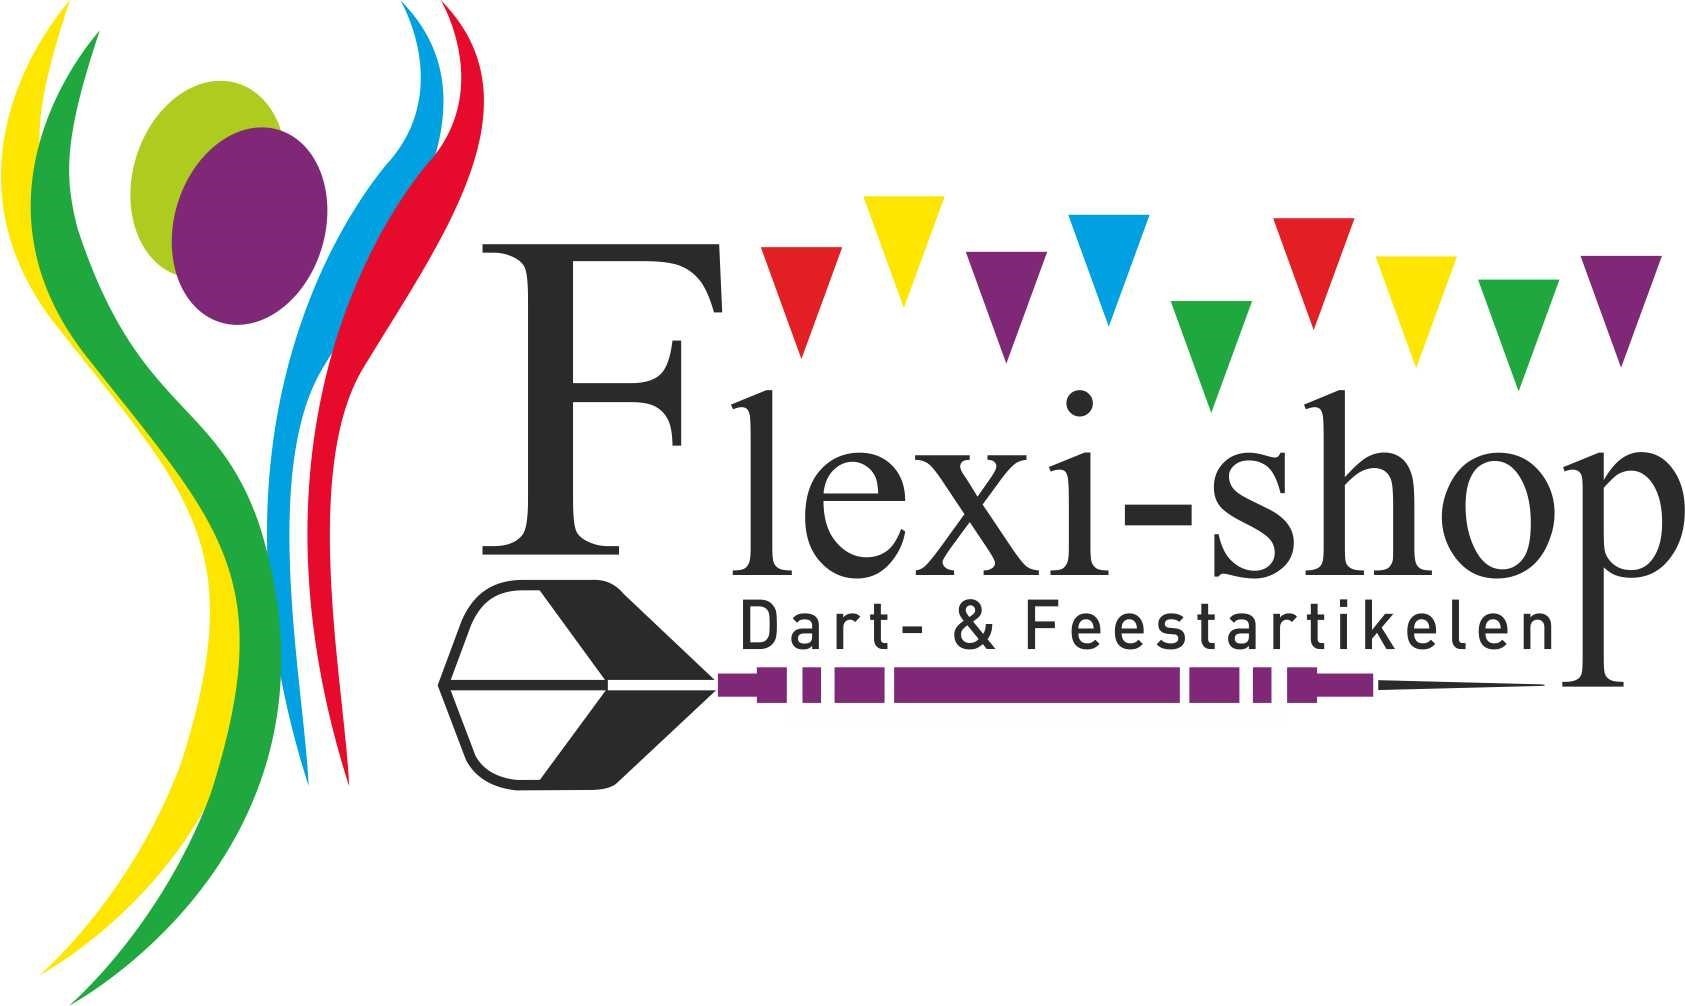 Flexi-shop dart- en feestartikelen